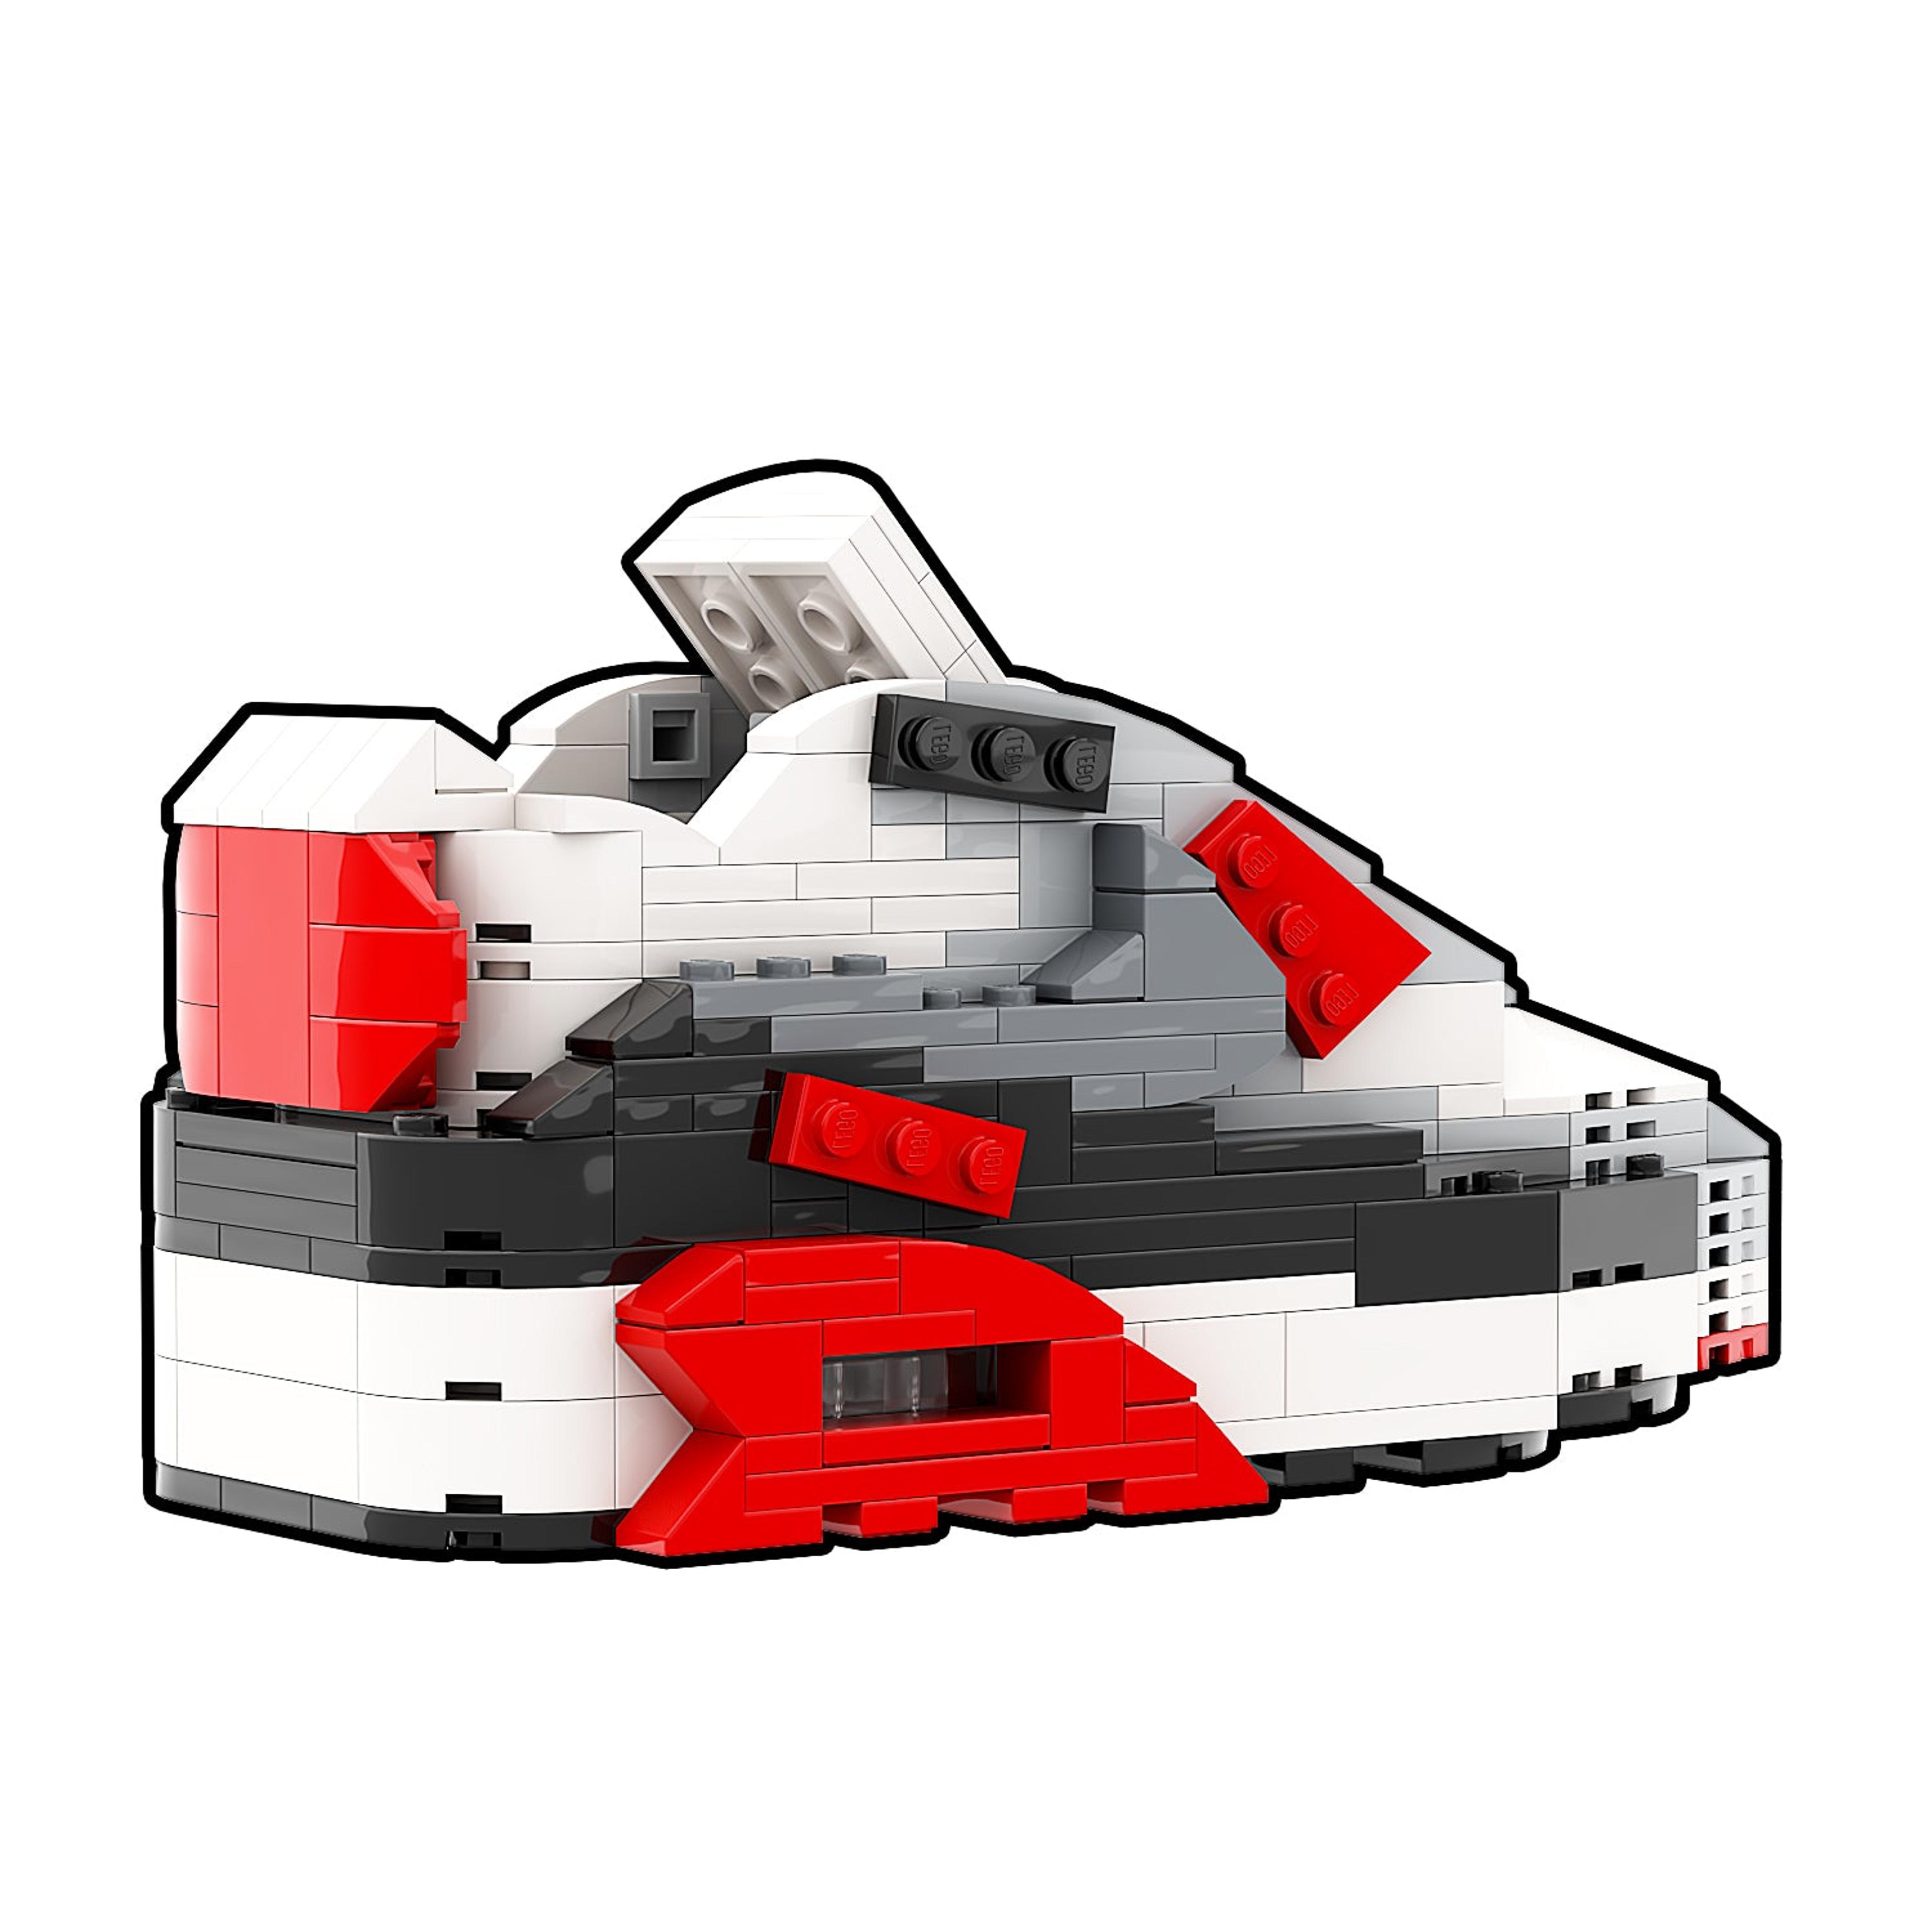 Alternate View 7 of REGULAR "Air Max 90 Infrared" Sneaker Bricks with Mini Figure